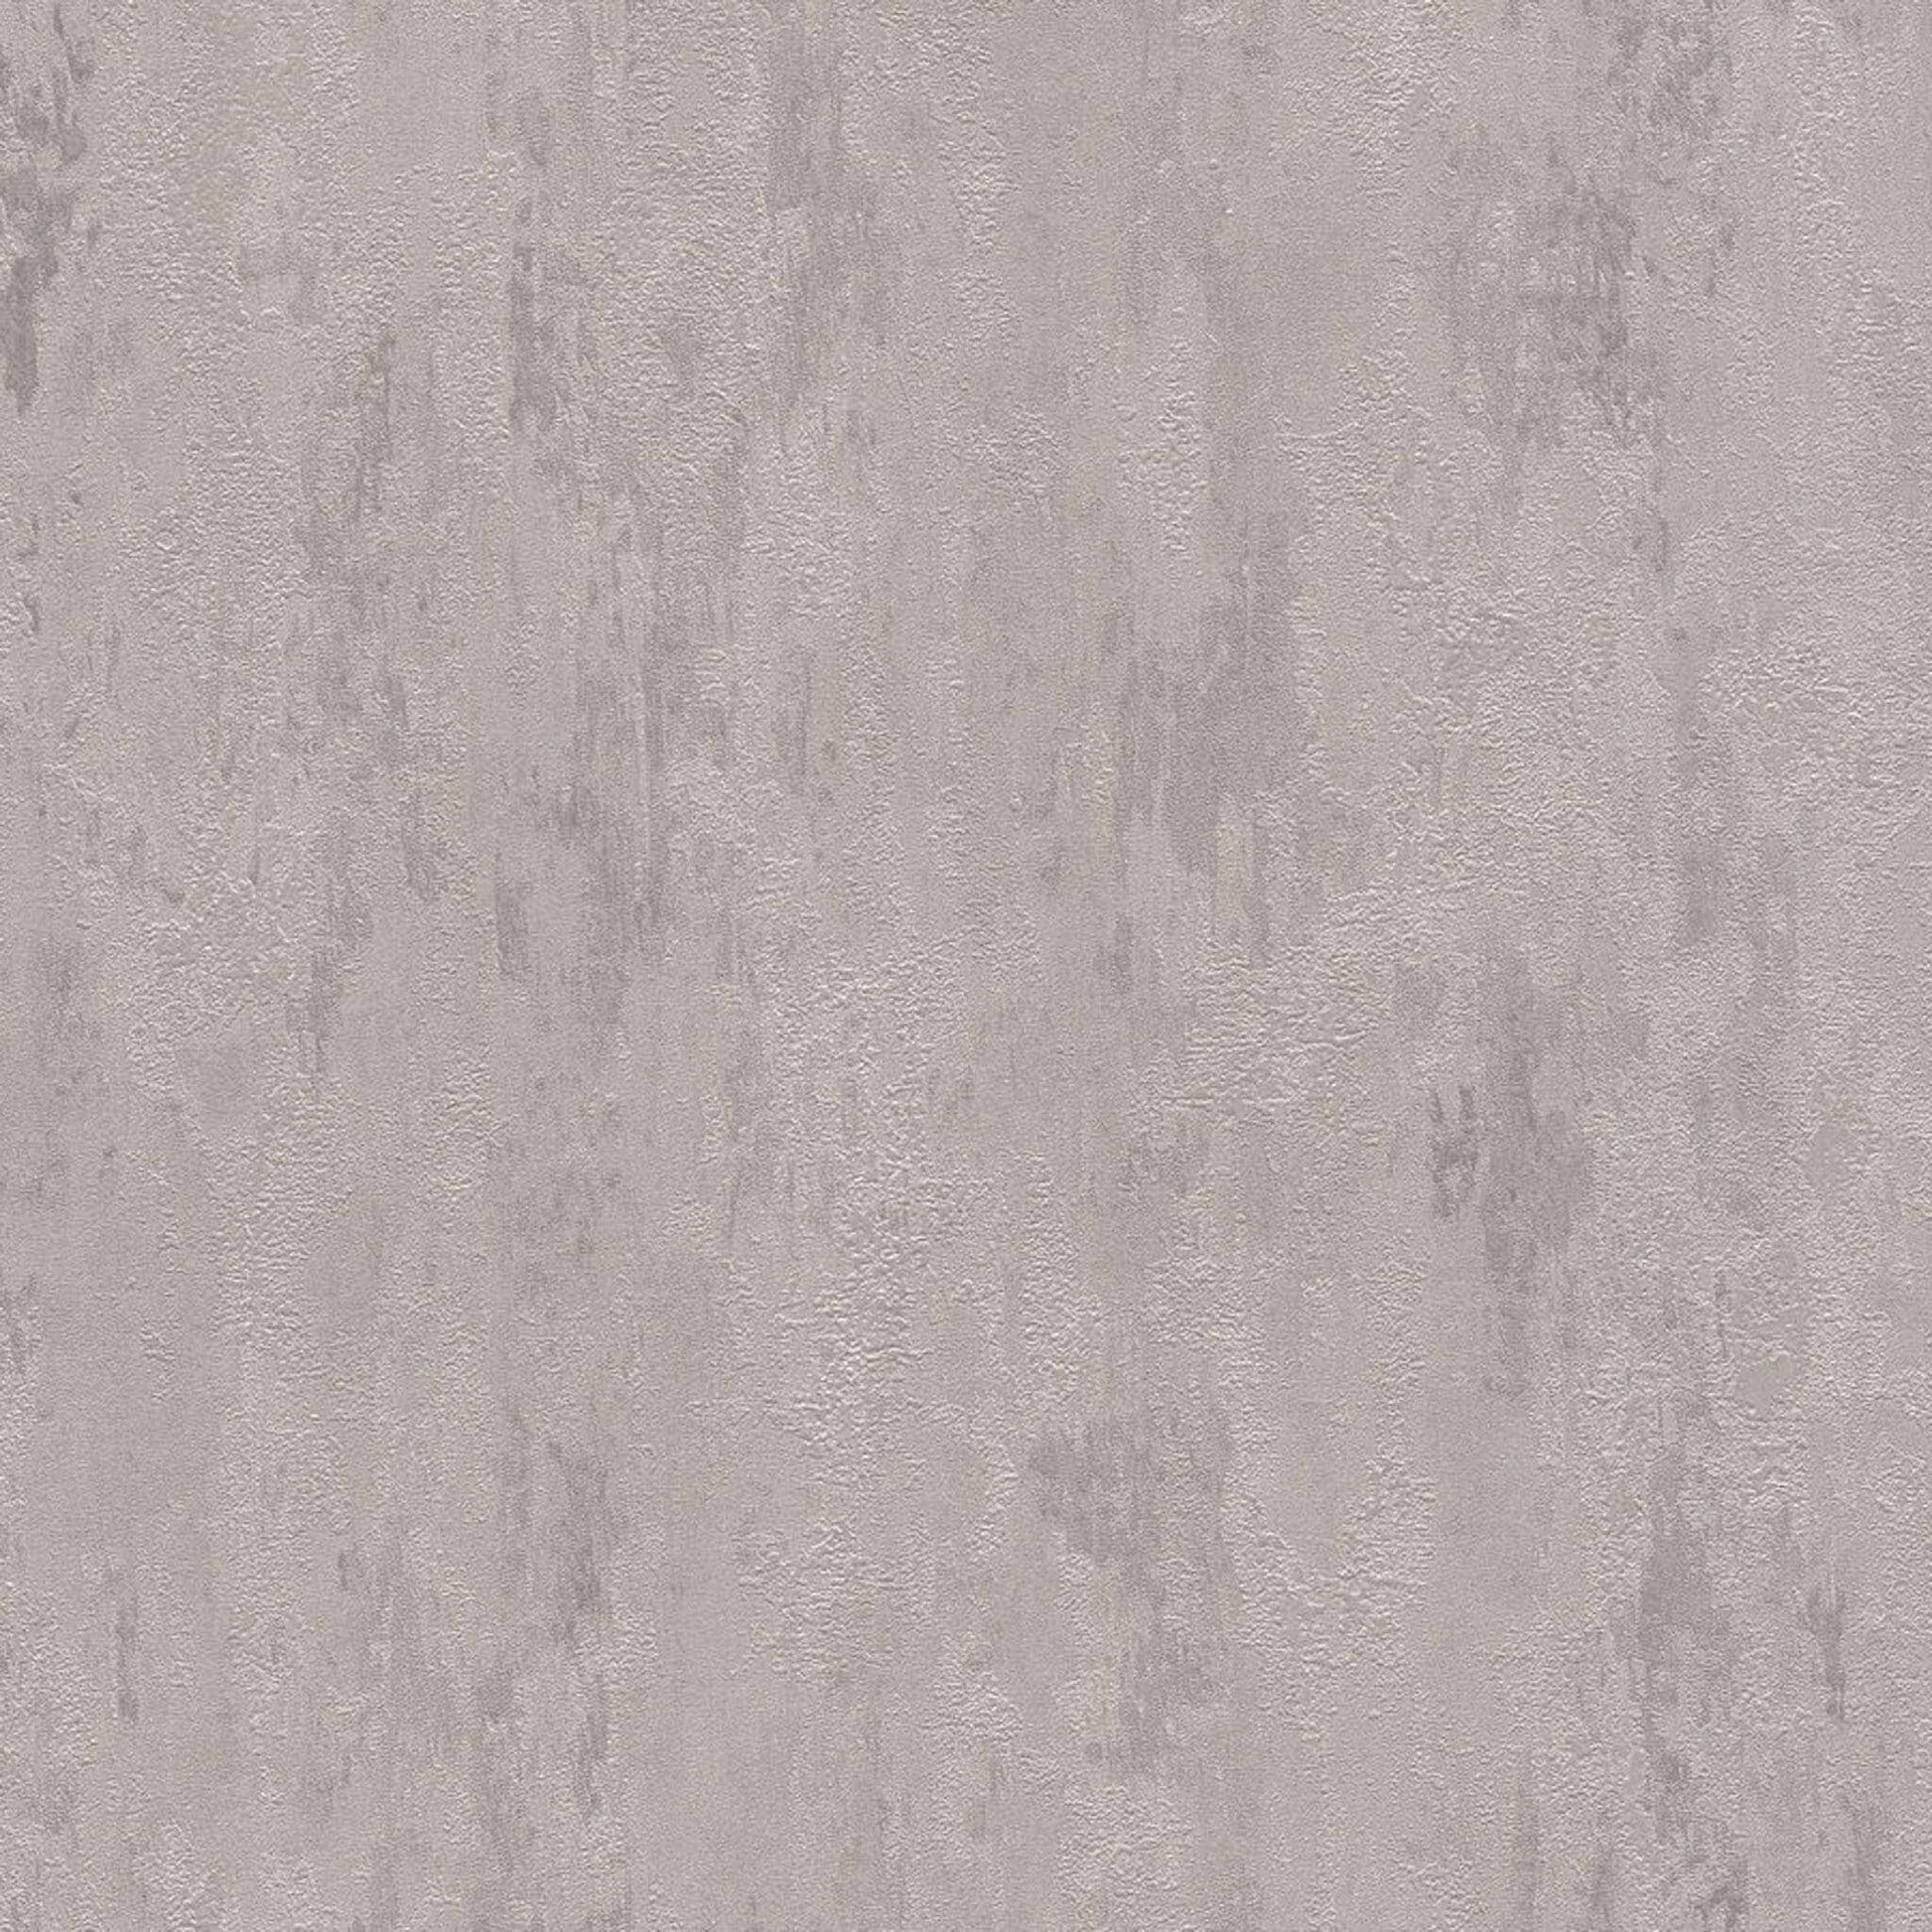 Wallpaper  -  AS Creations Cream Grey Metallic Wallpaper - 38044-1  -  50156233